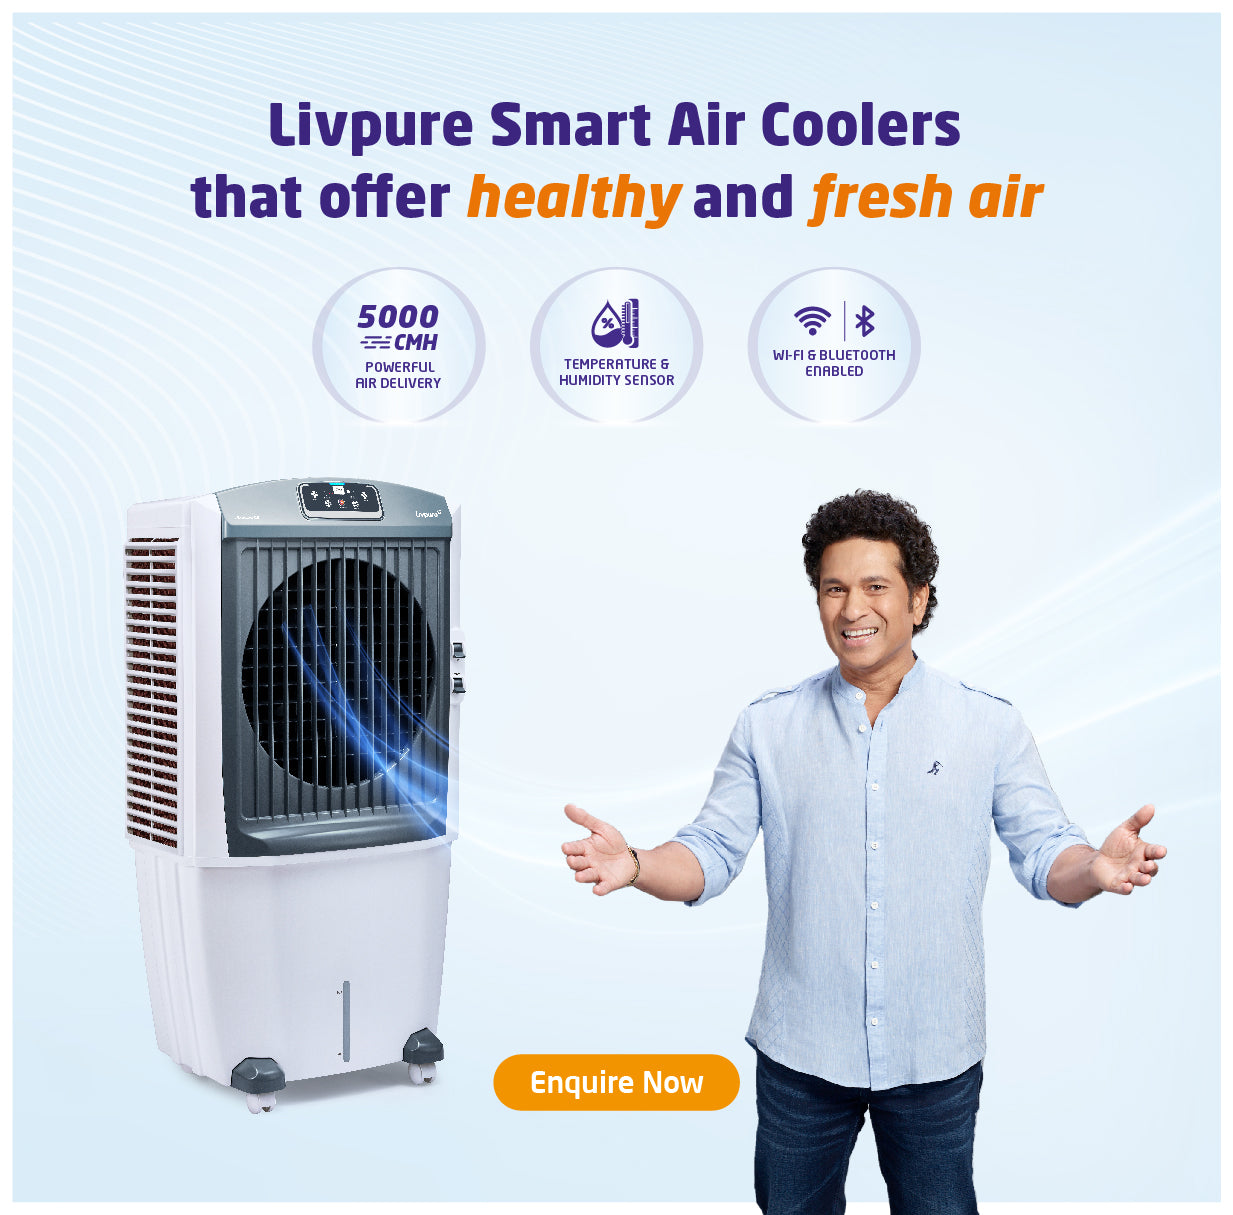 Livpure smart air coolers